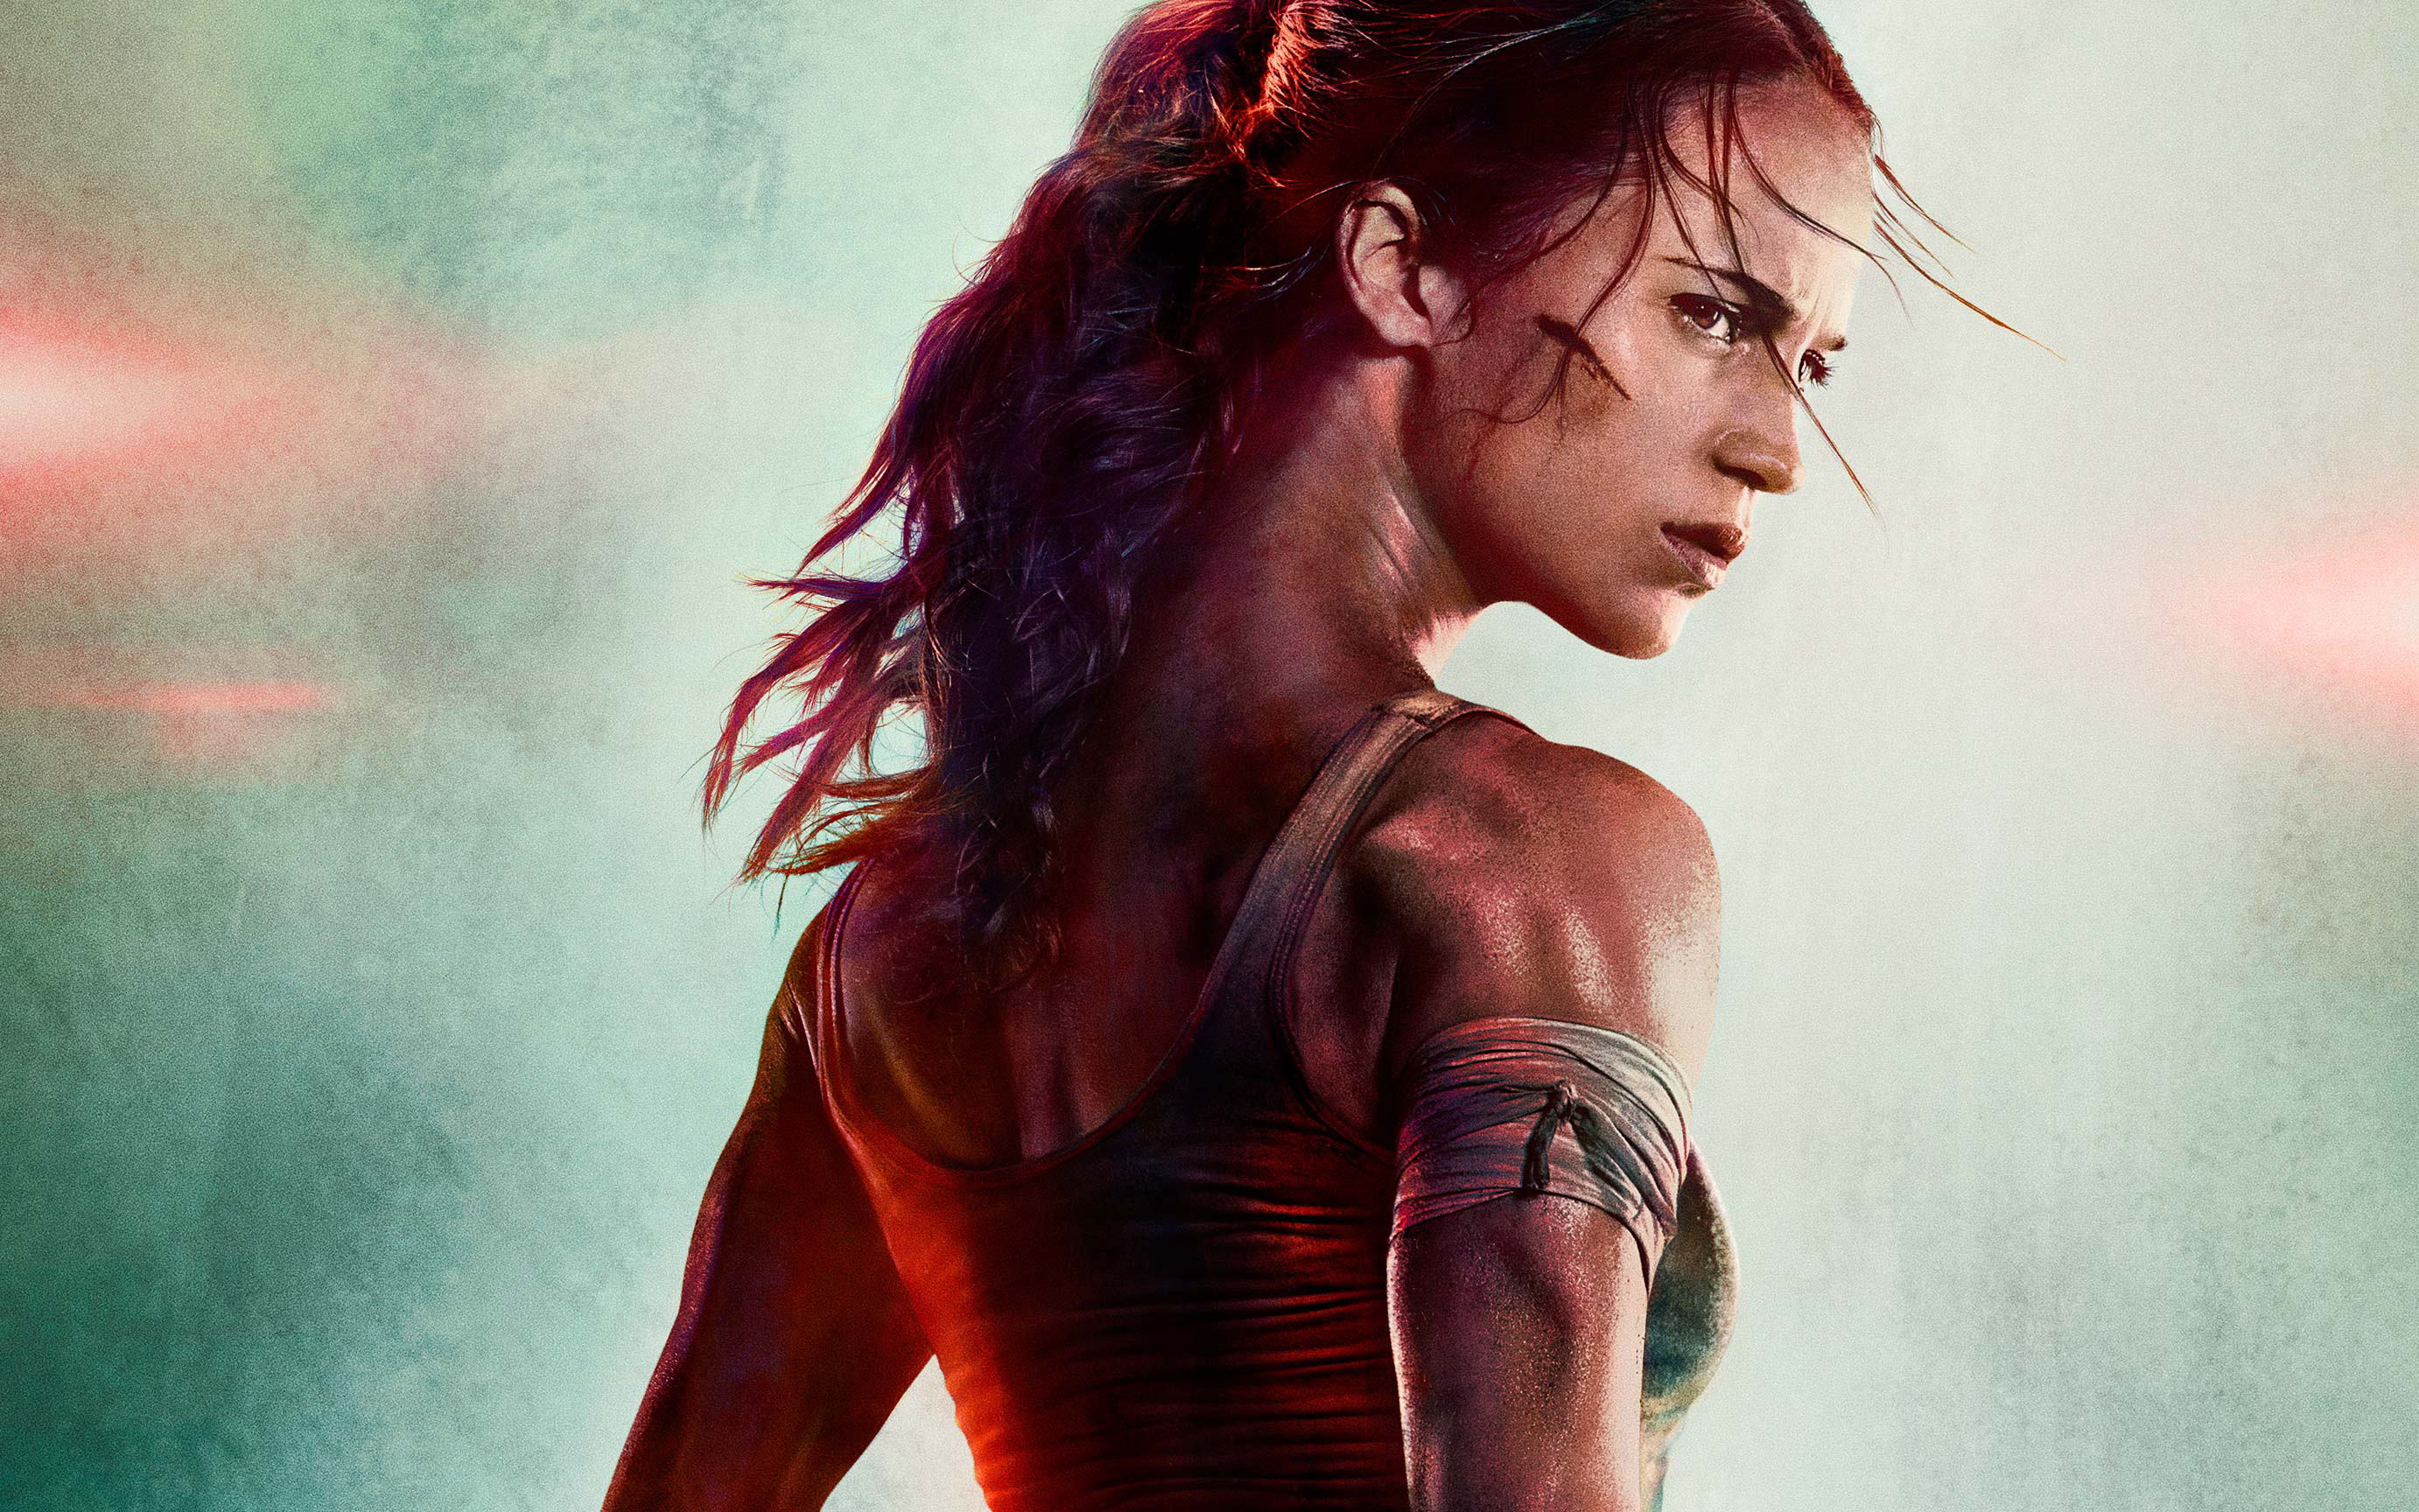 Tomb Raider 2018 HD Wallpaper ·① WallpaperTag